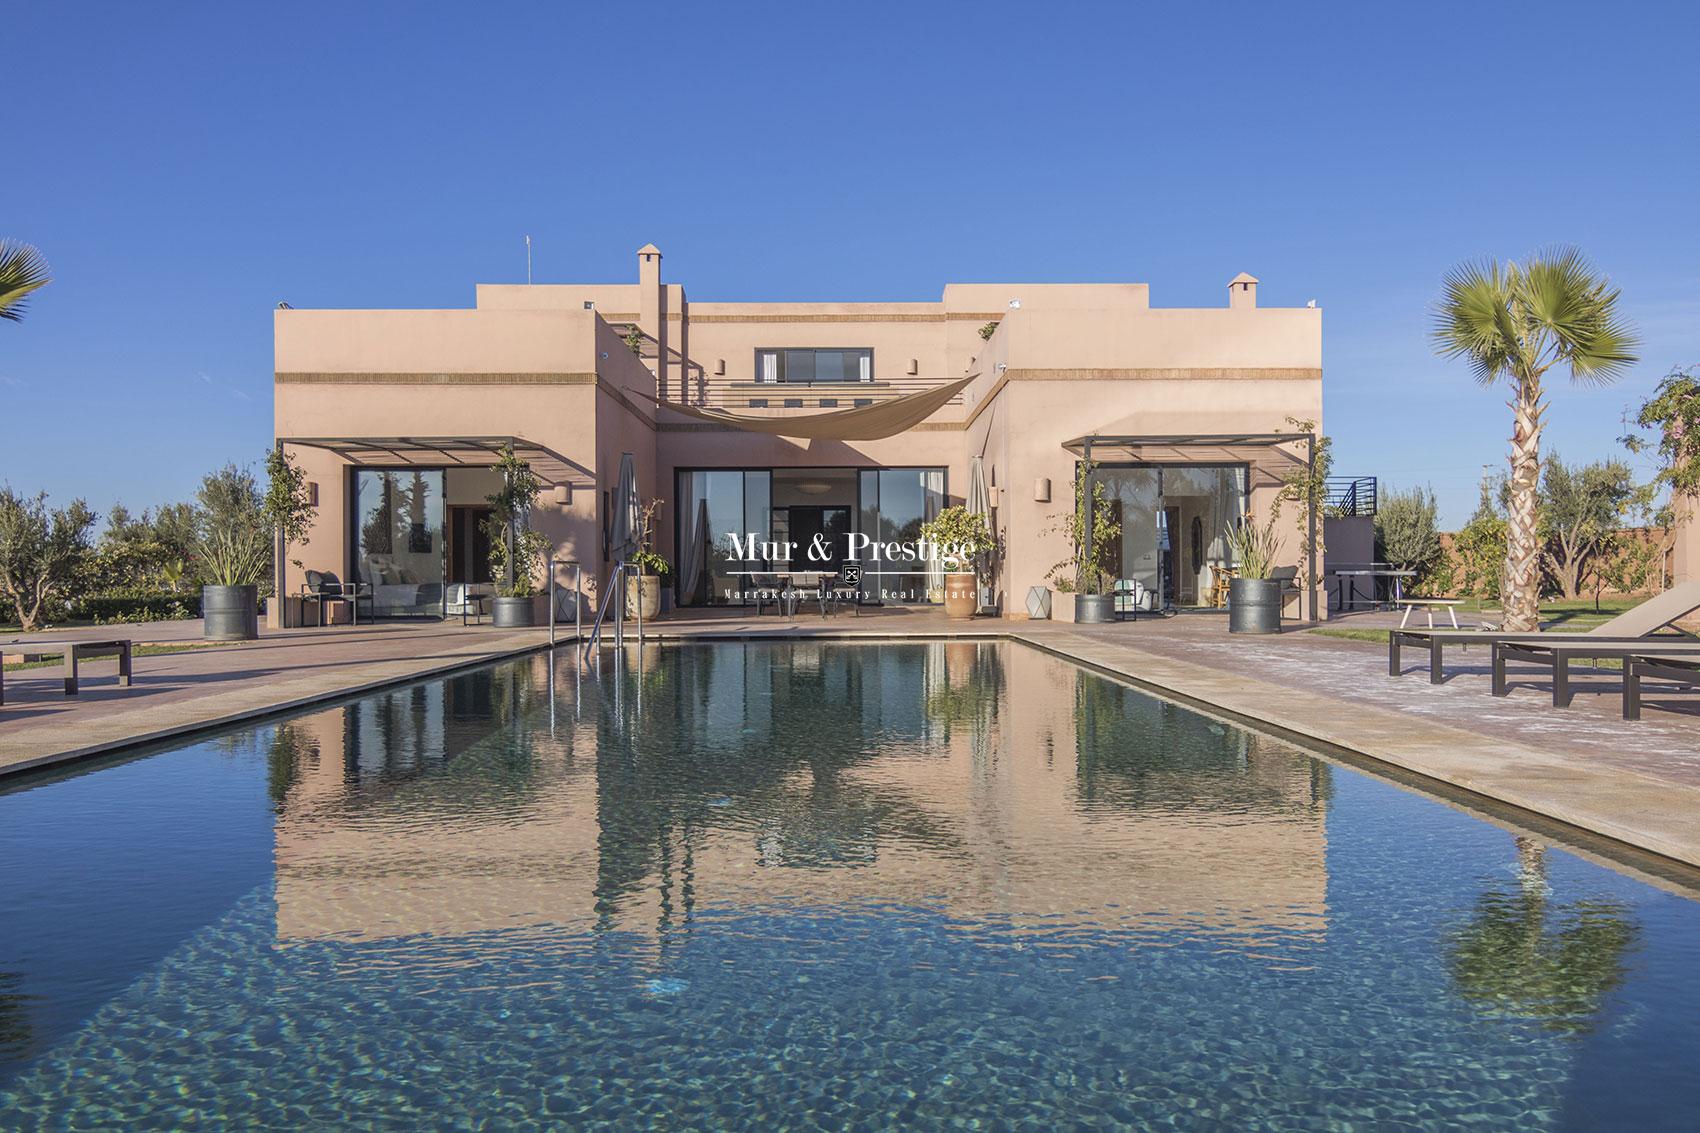 Luxueuse villa en vente face a l’atlas a Marrakech - copie